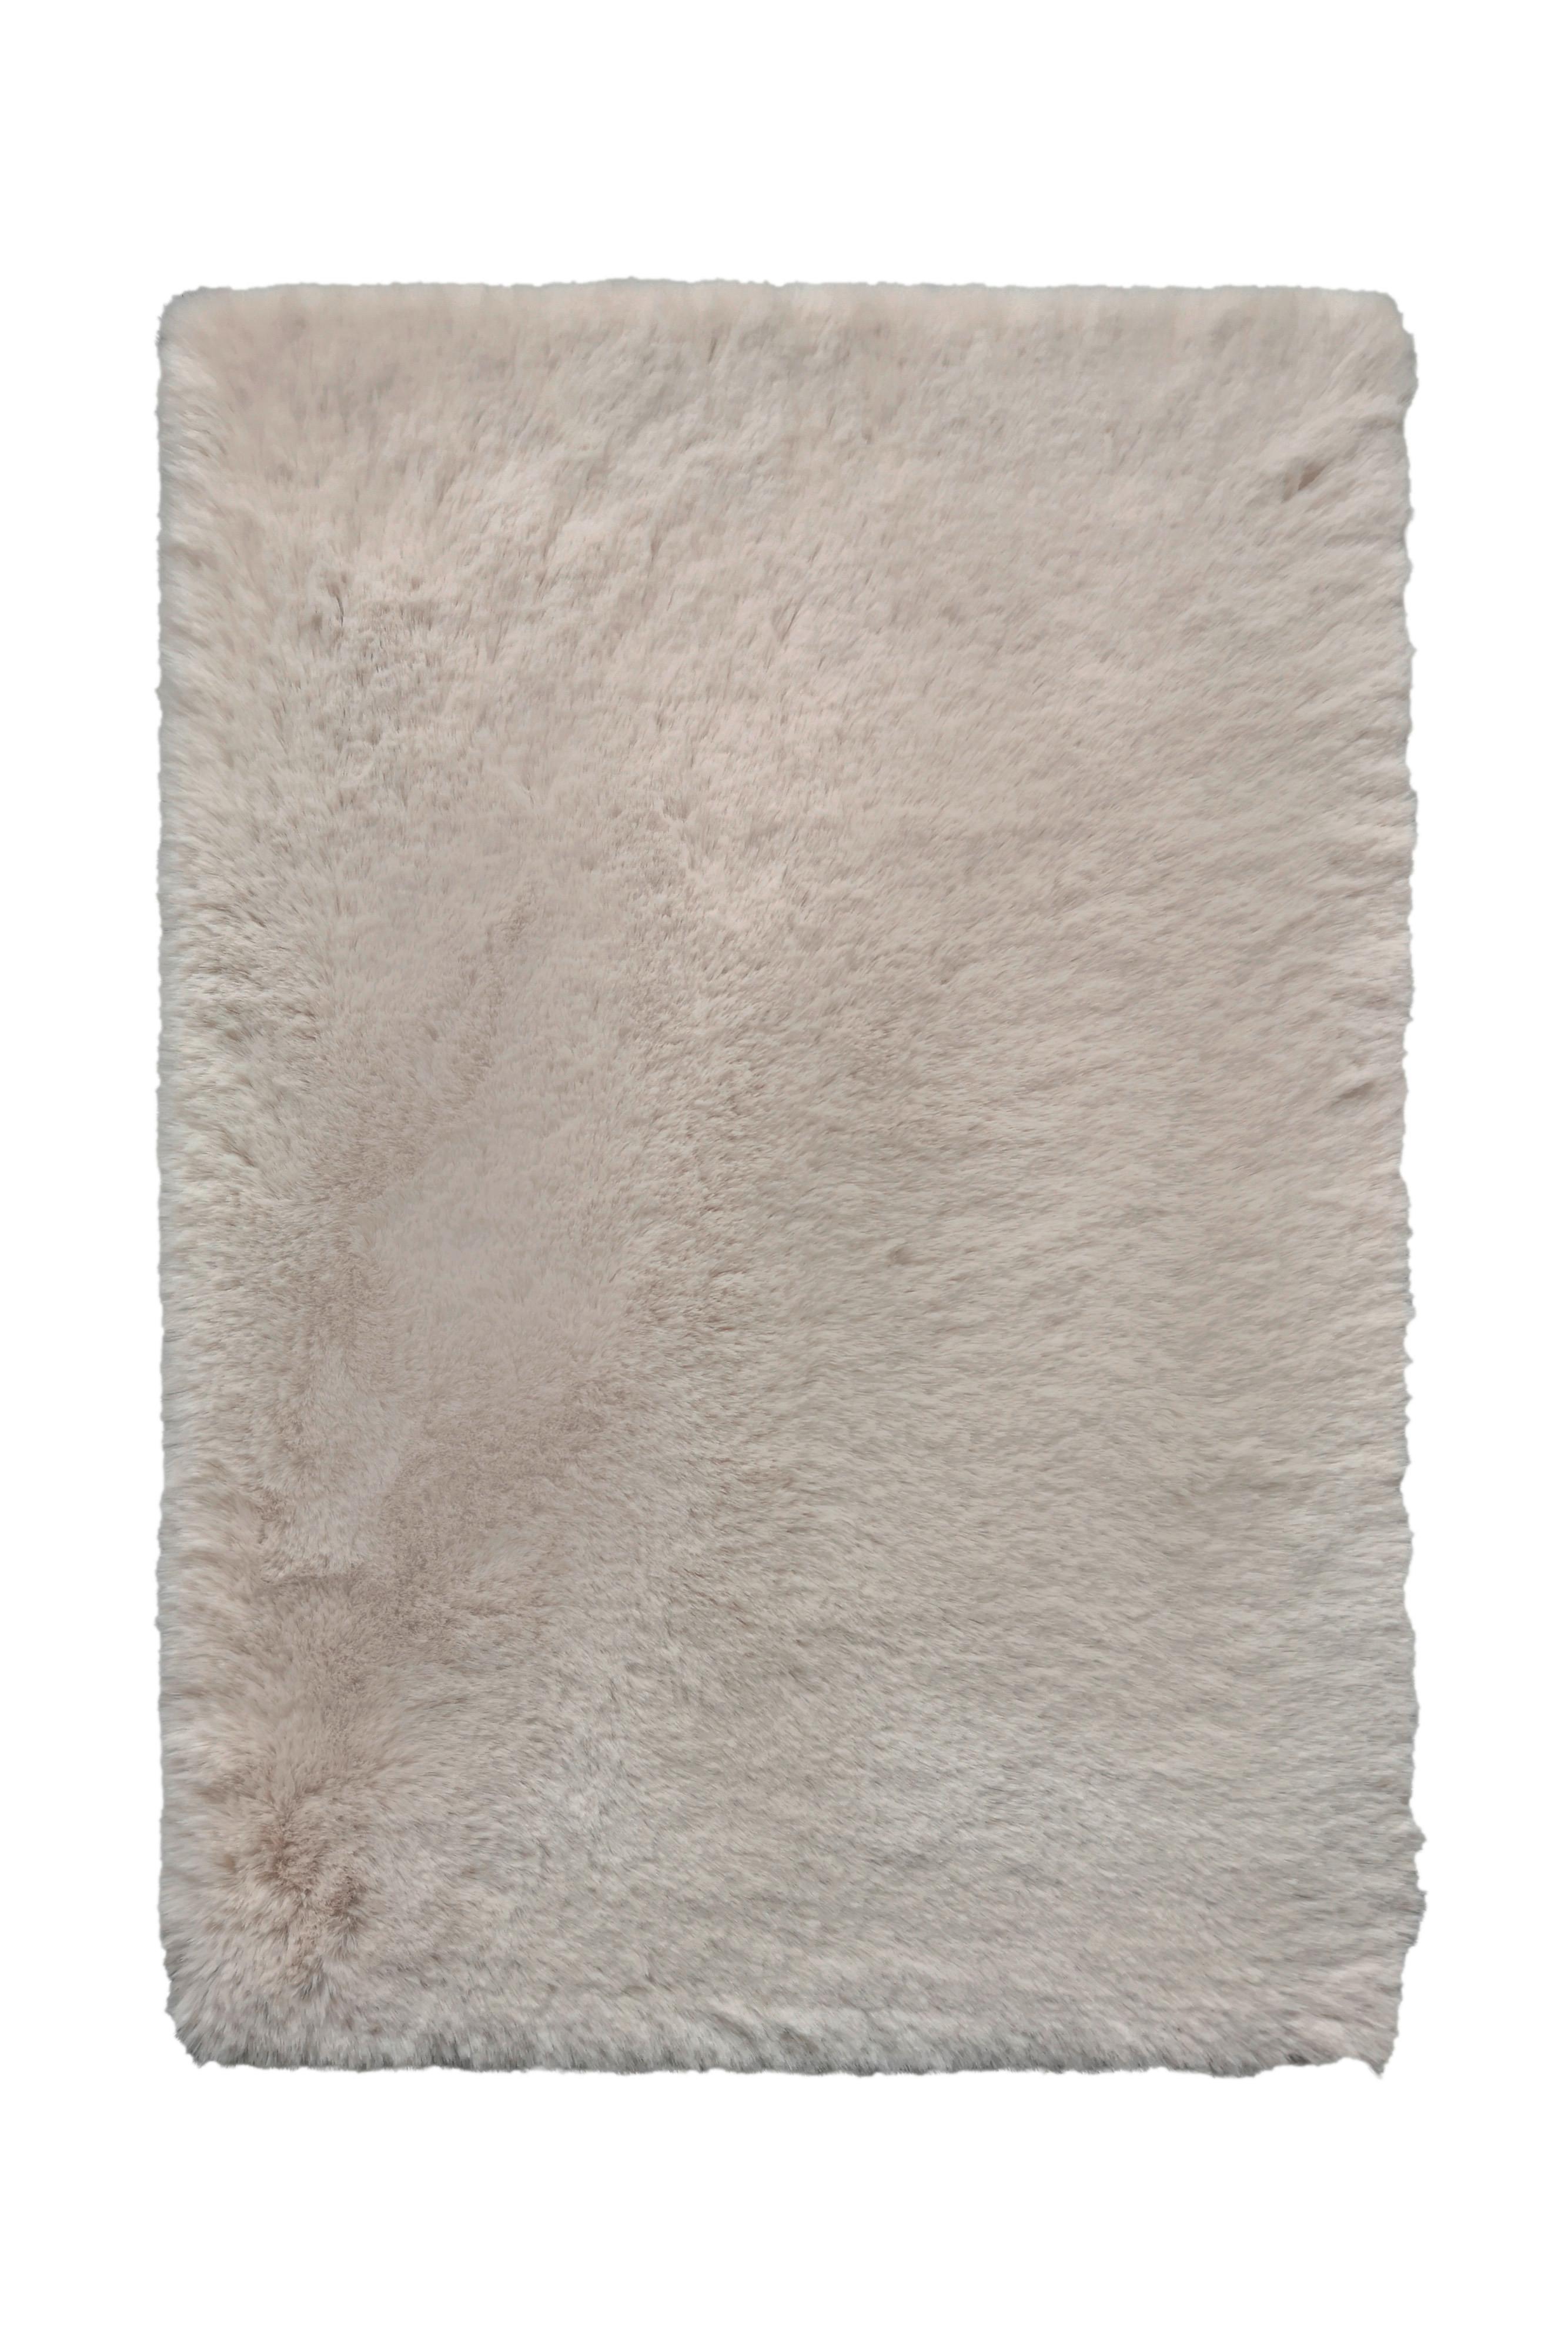 Fellteppich Magarete Beige 120x160 cm - Beige, Textil (120/160cm) - Luca Bessoni